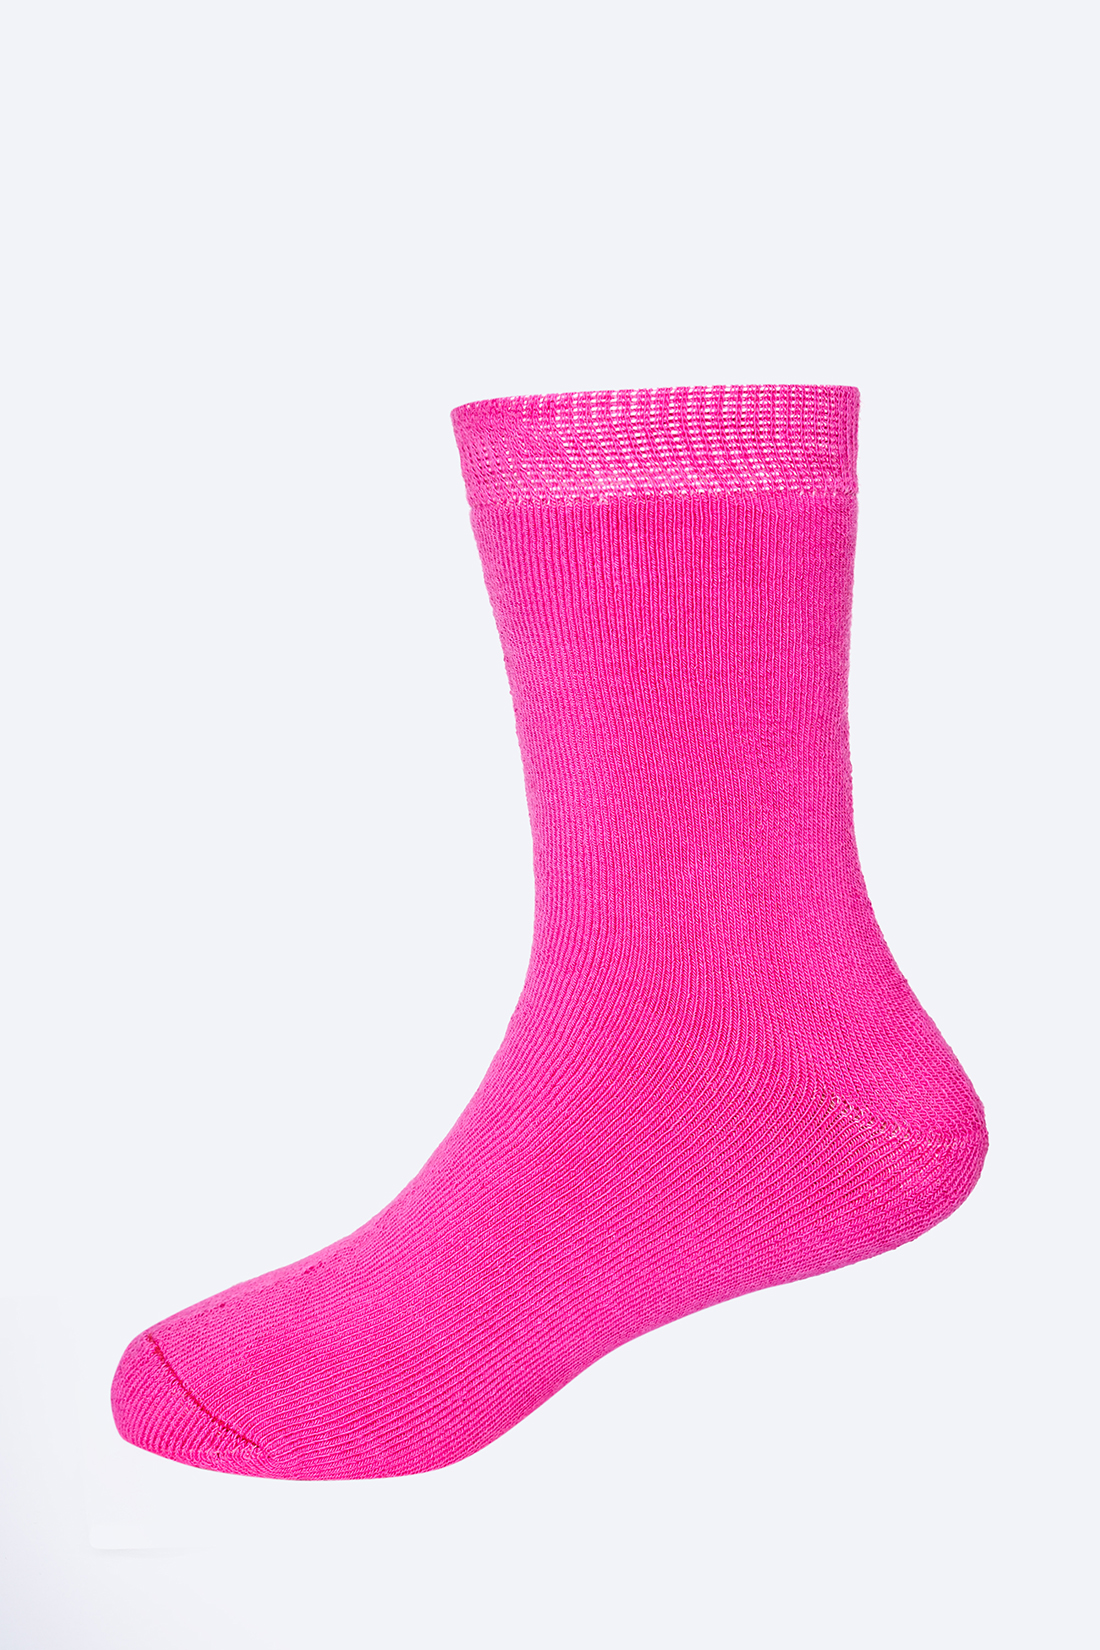 Носки для девочки (арт. baon BK399503), размер 26/28, цвет розовый